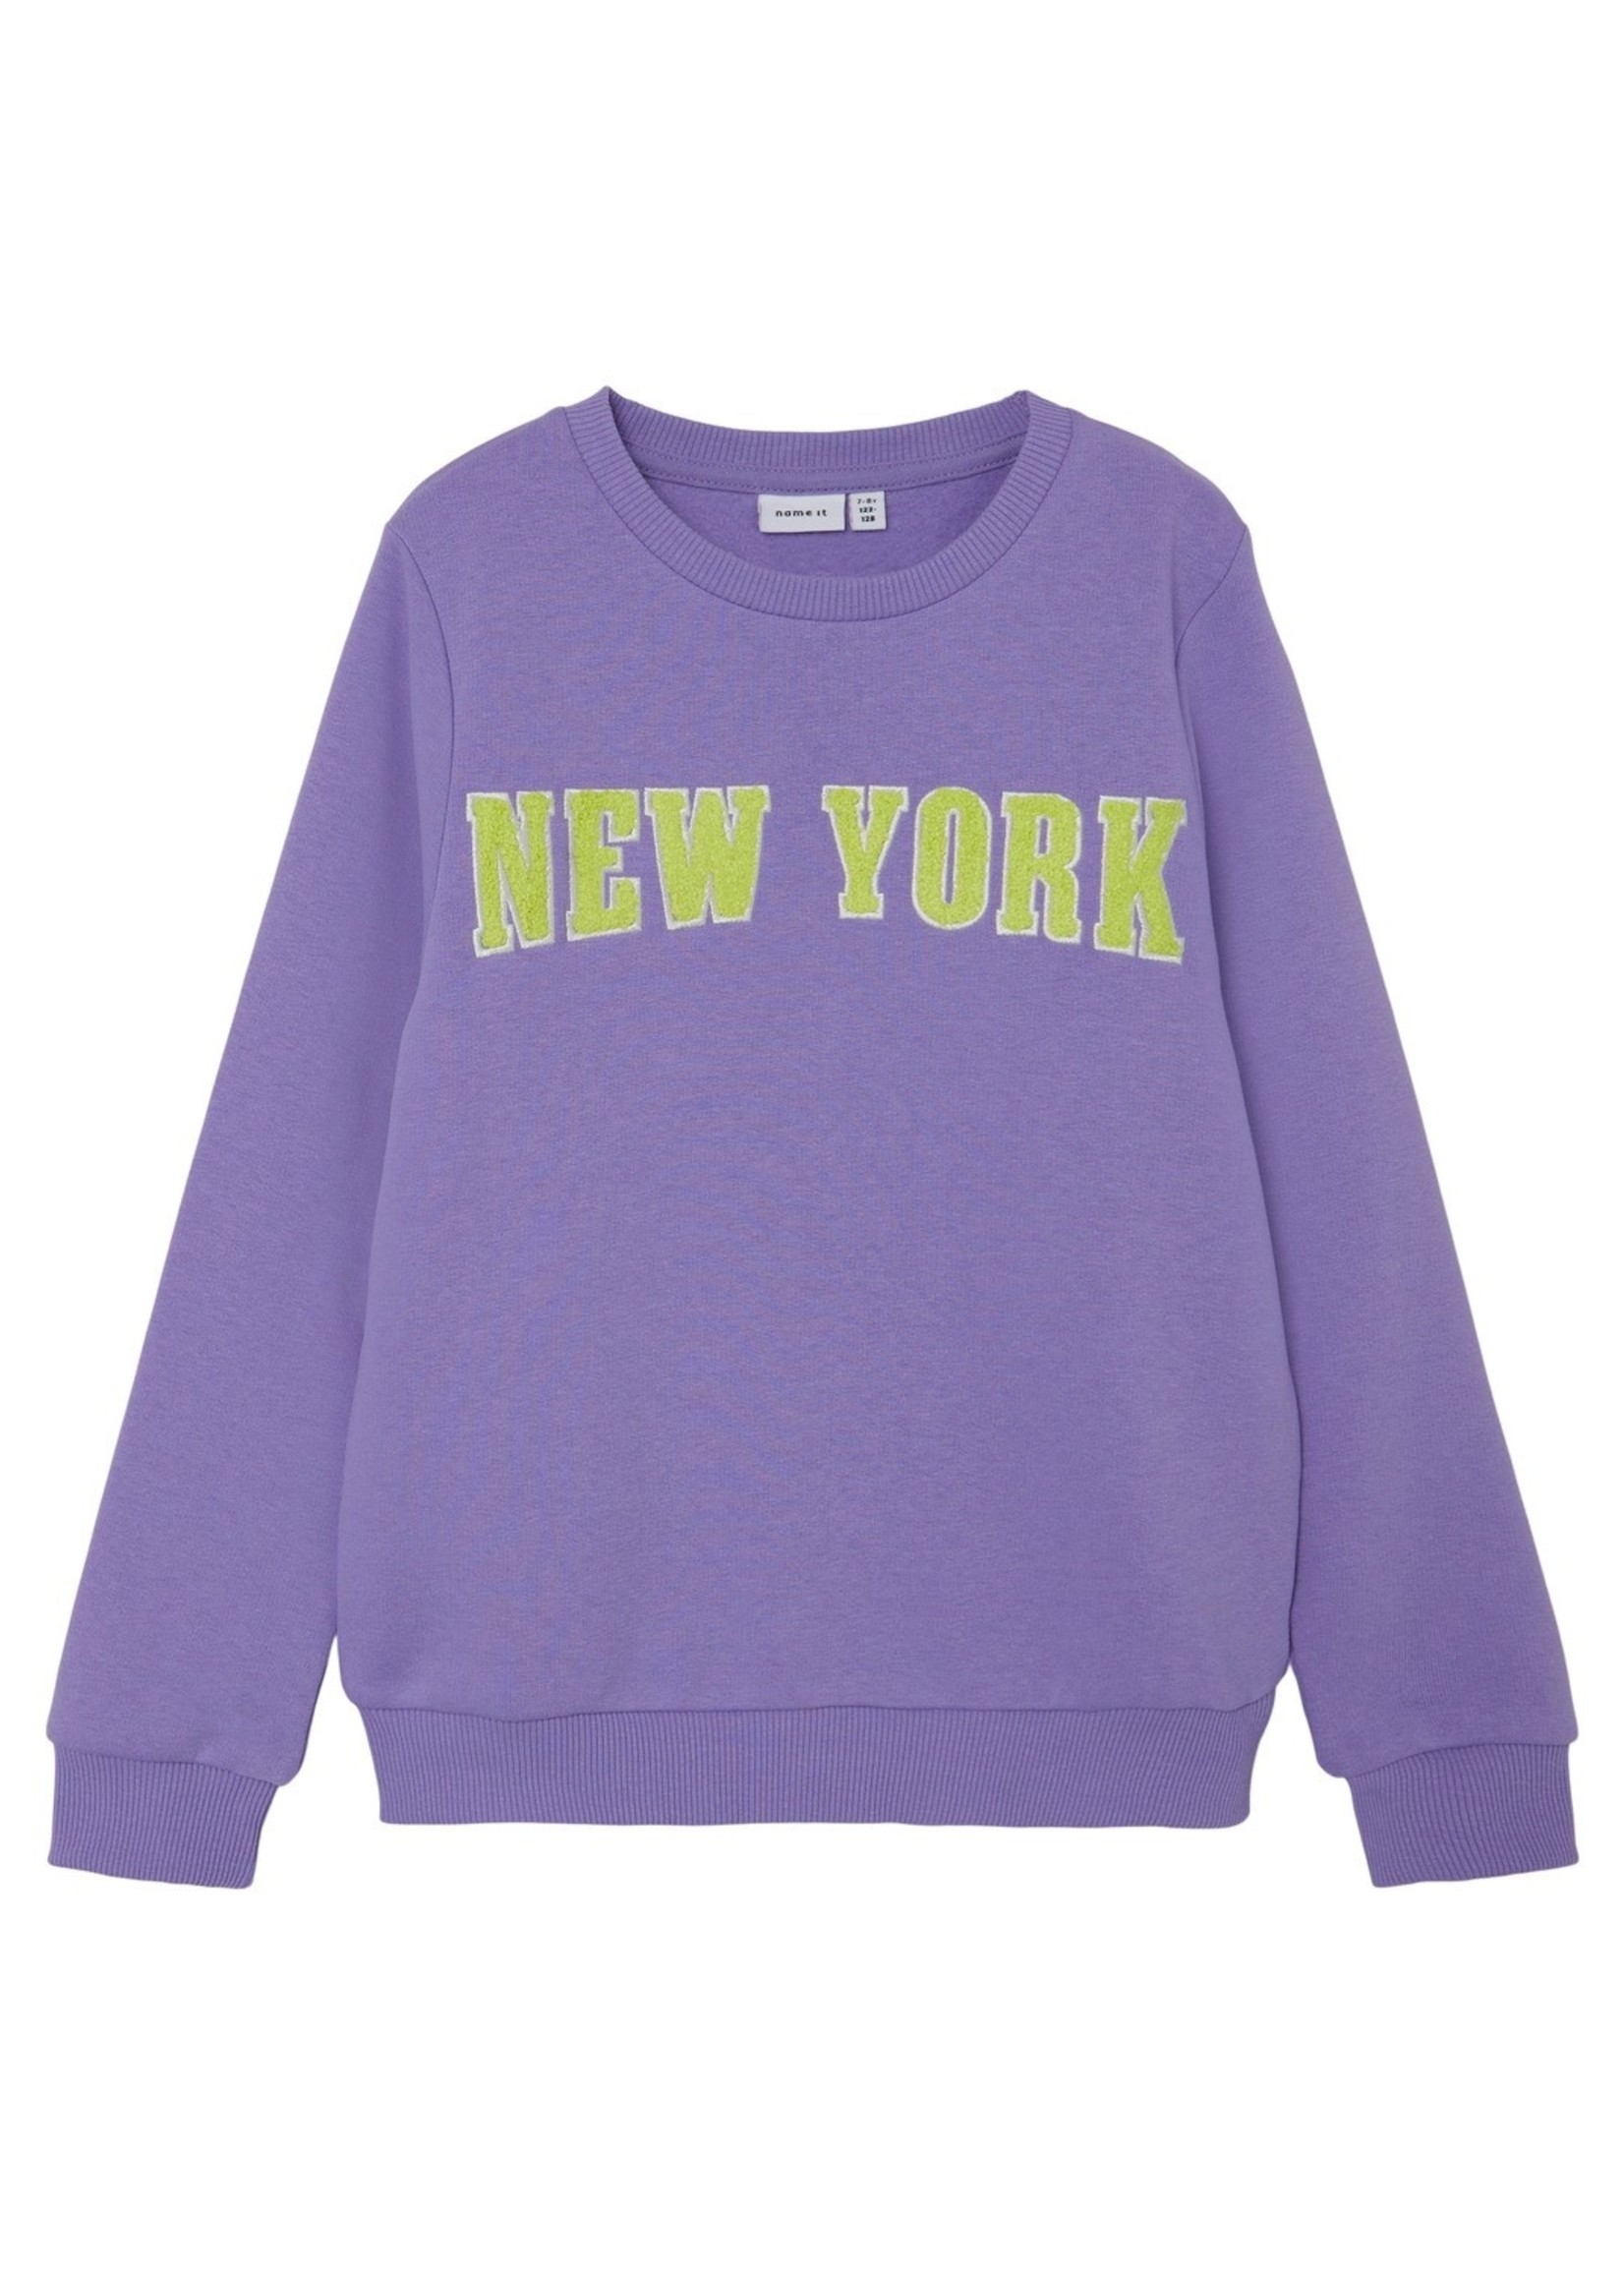 Name it - Flola sweater - Aster purple